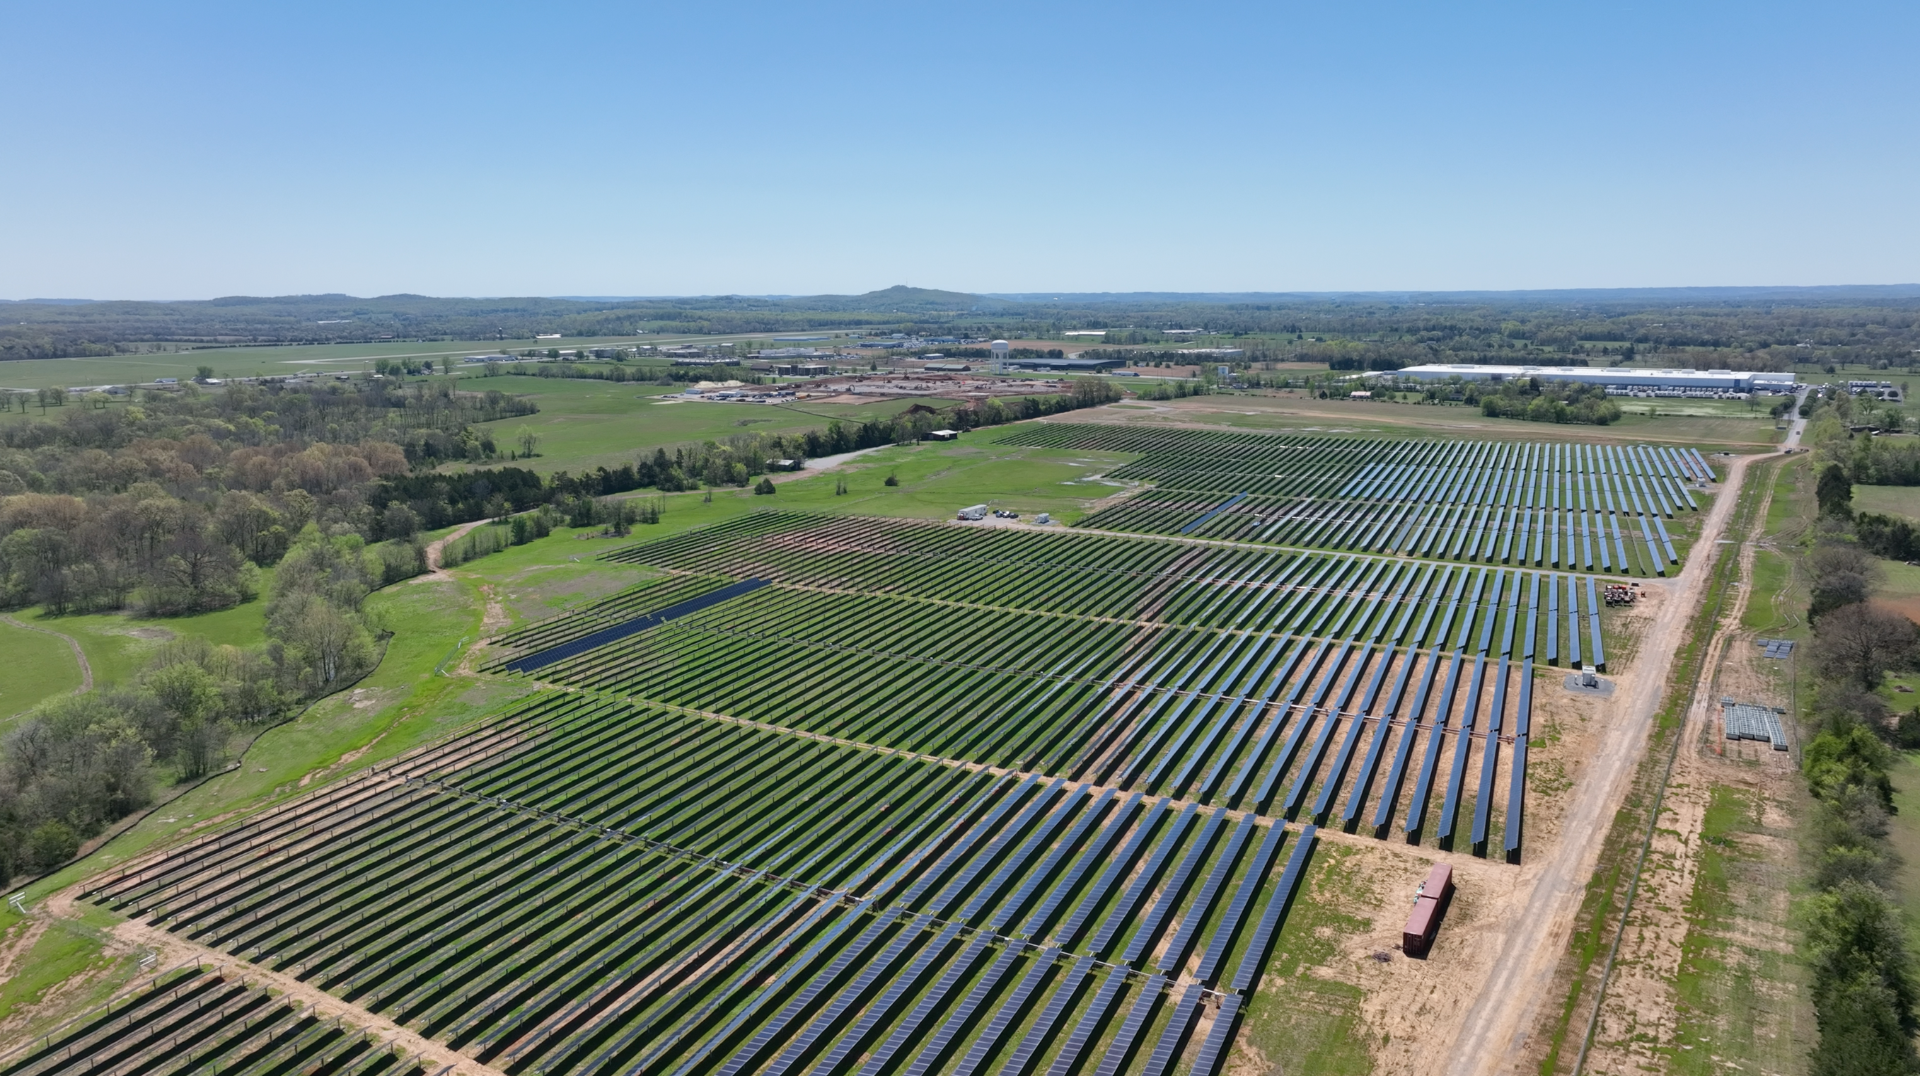 Vanderbilt I Solar Farm